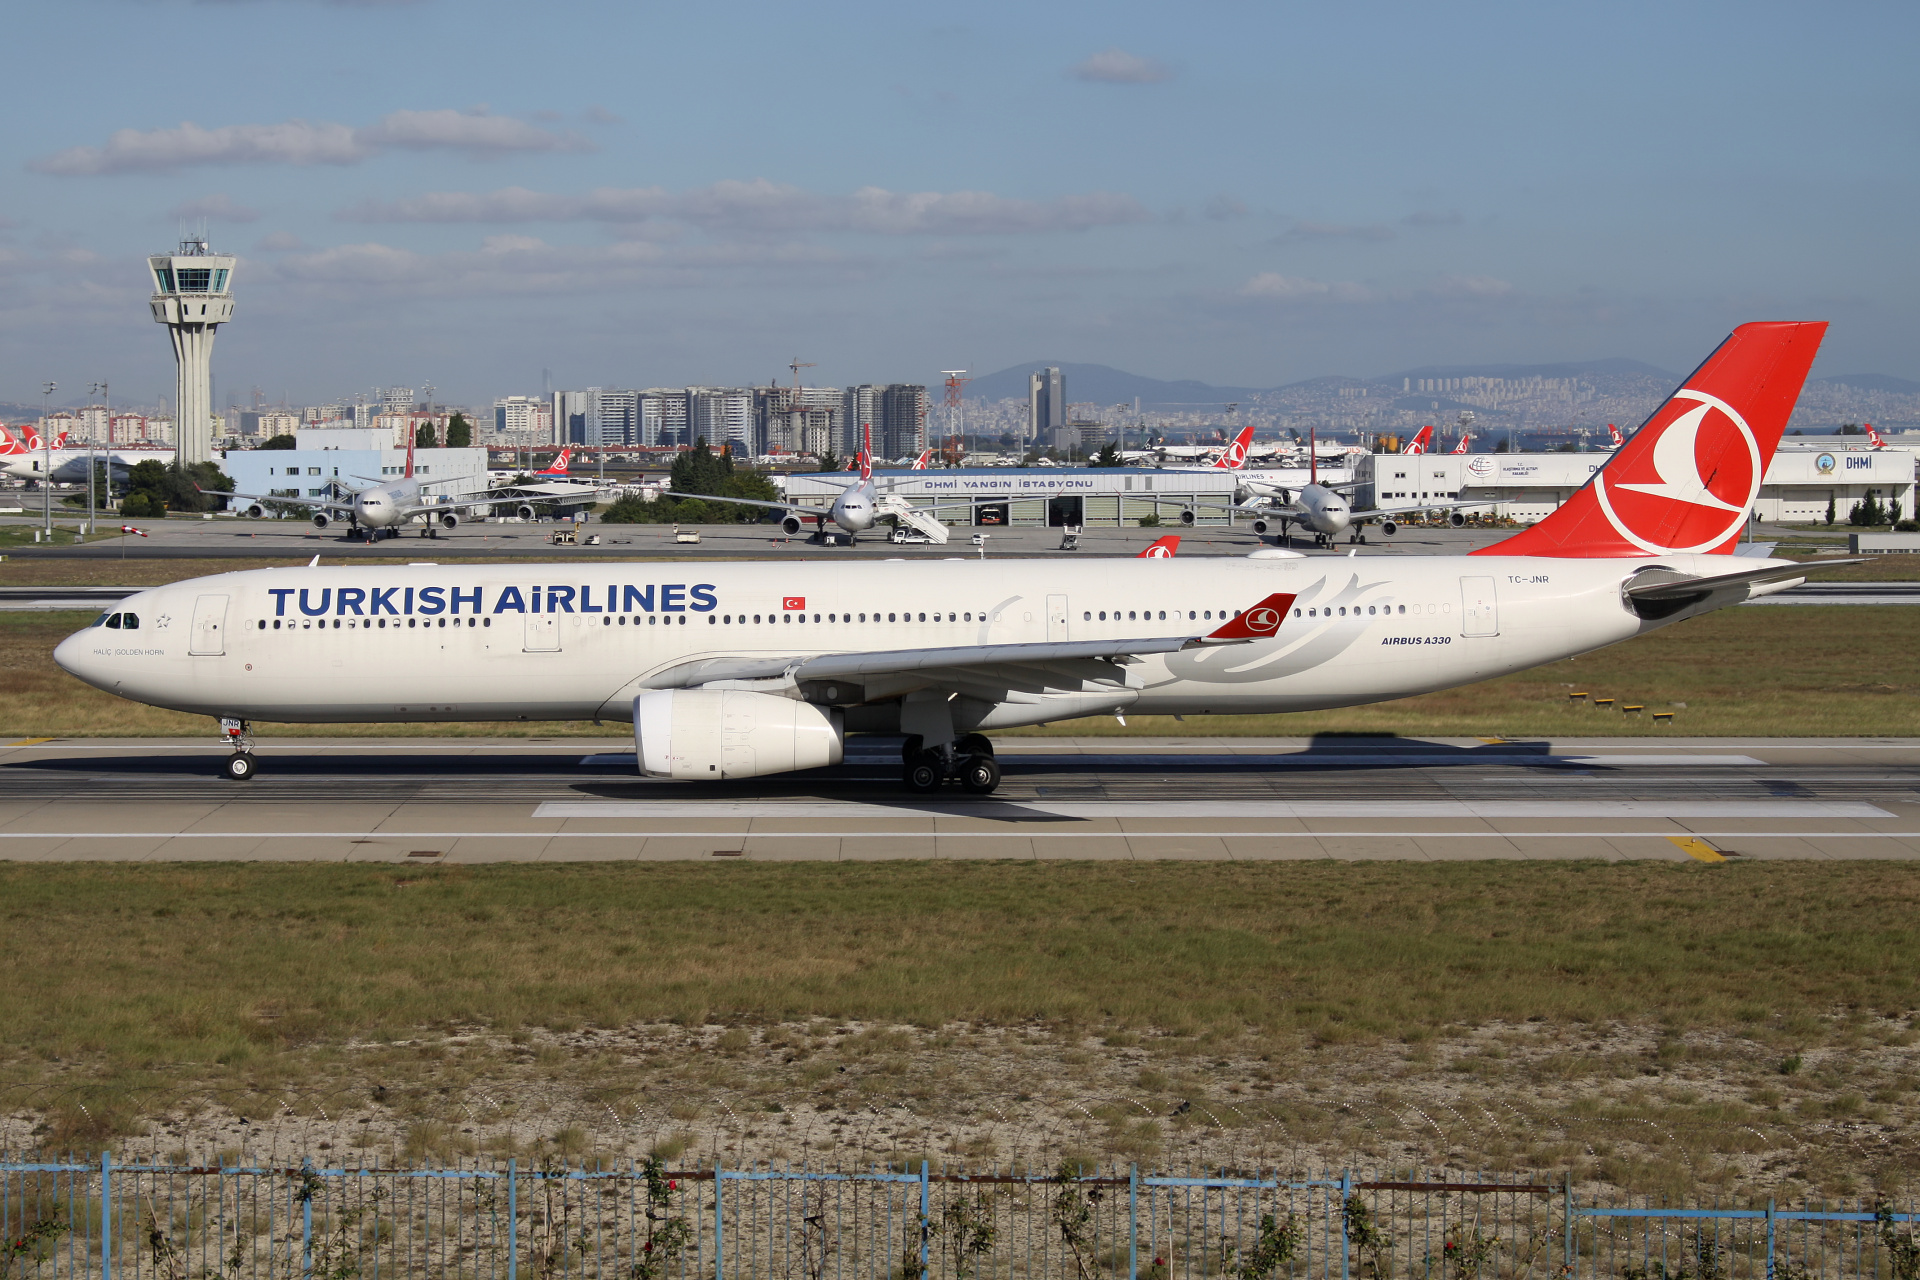 TC-JNR (Samoloty » Port Lotniczy im. Atatürka w Stambule » Airbus A330-300 » THY Turkish Airlines)